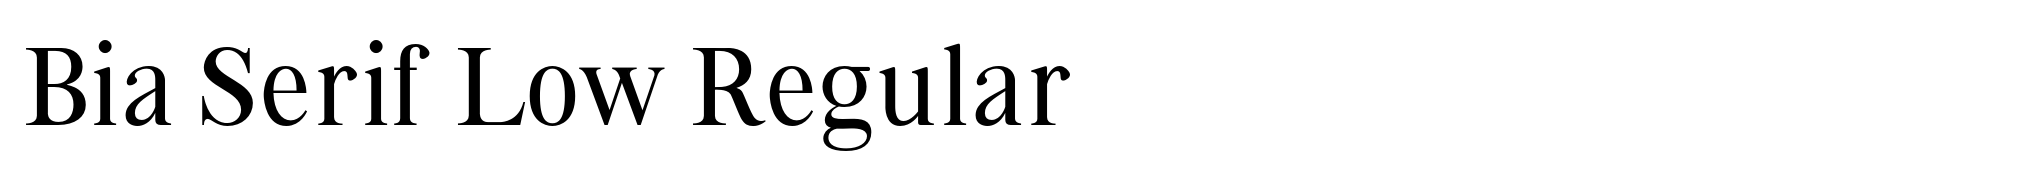 Bia Serif Low Regular image